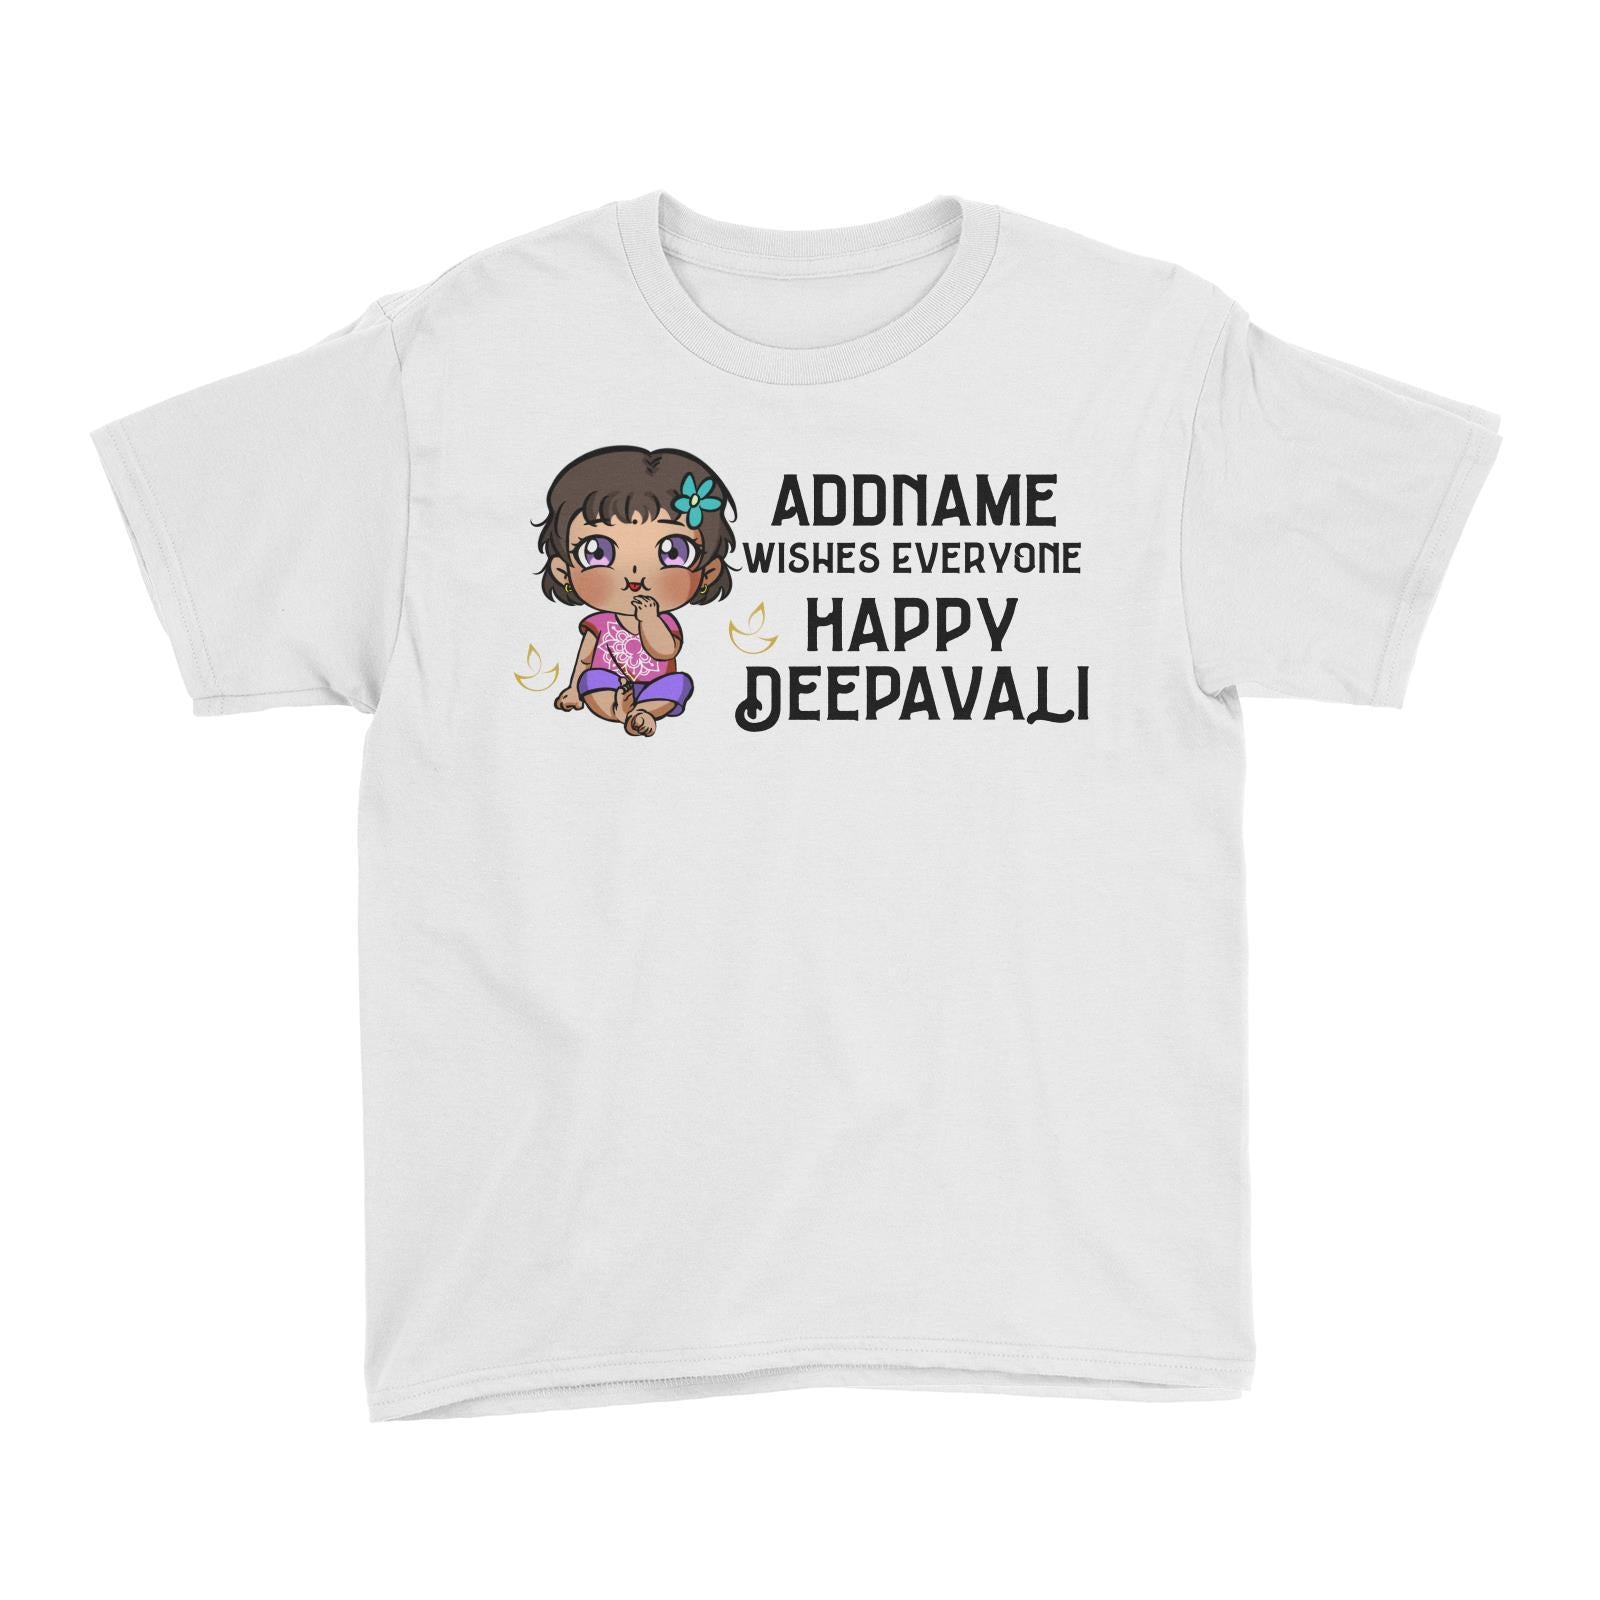 Deepavali Chibi Baby Girl Front Addname Wishes Everyone Deepavali Kid's T-Shirt